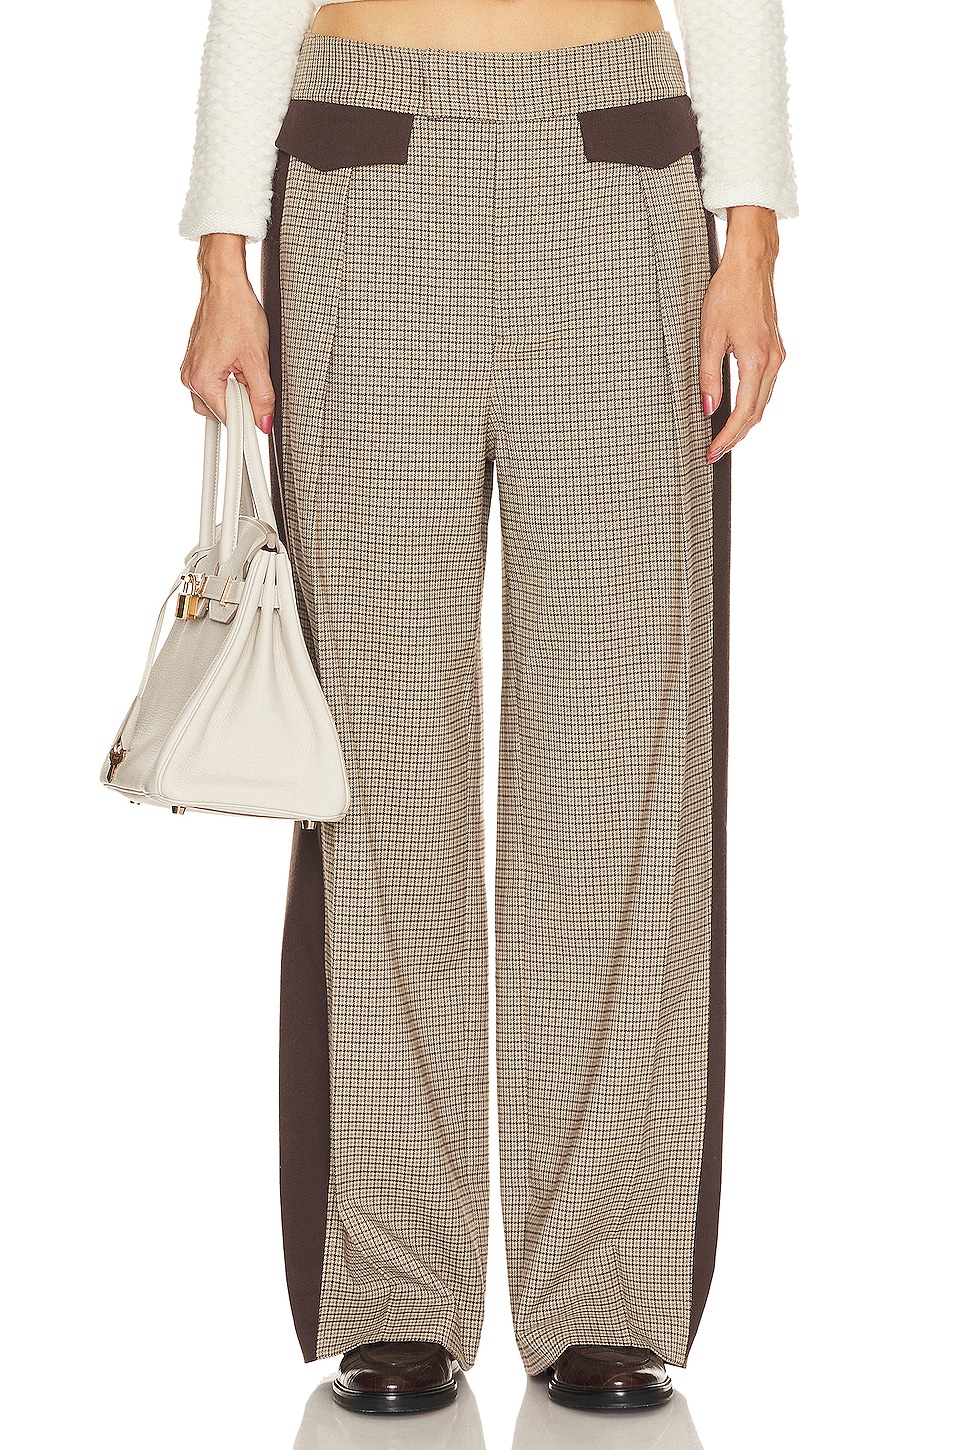 Buy Olive Trousers & Pants for Men by JEAN CAFÉ Online | Ajio.com